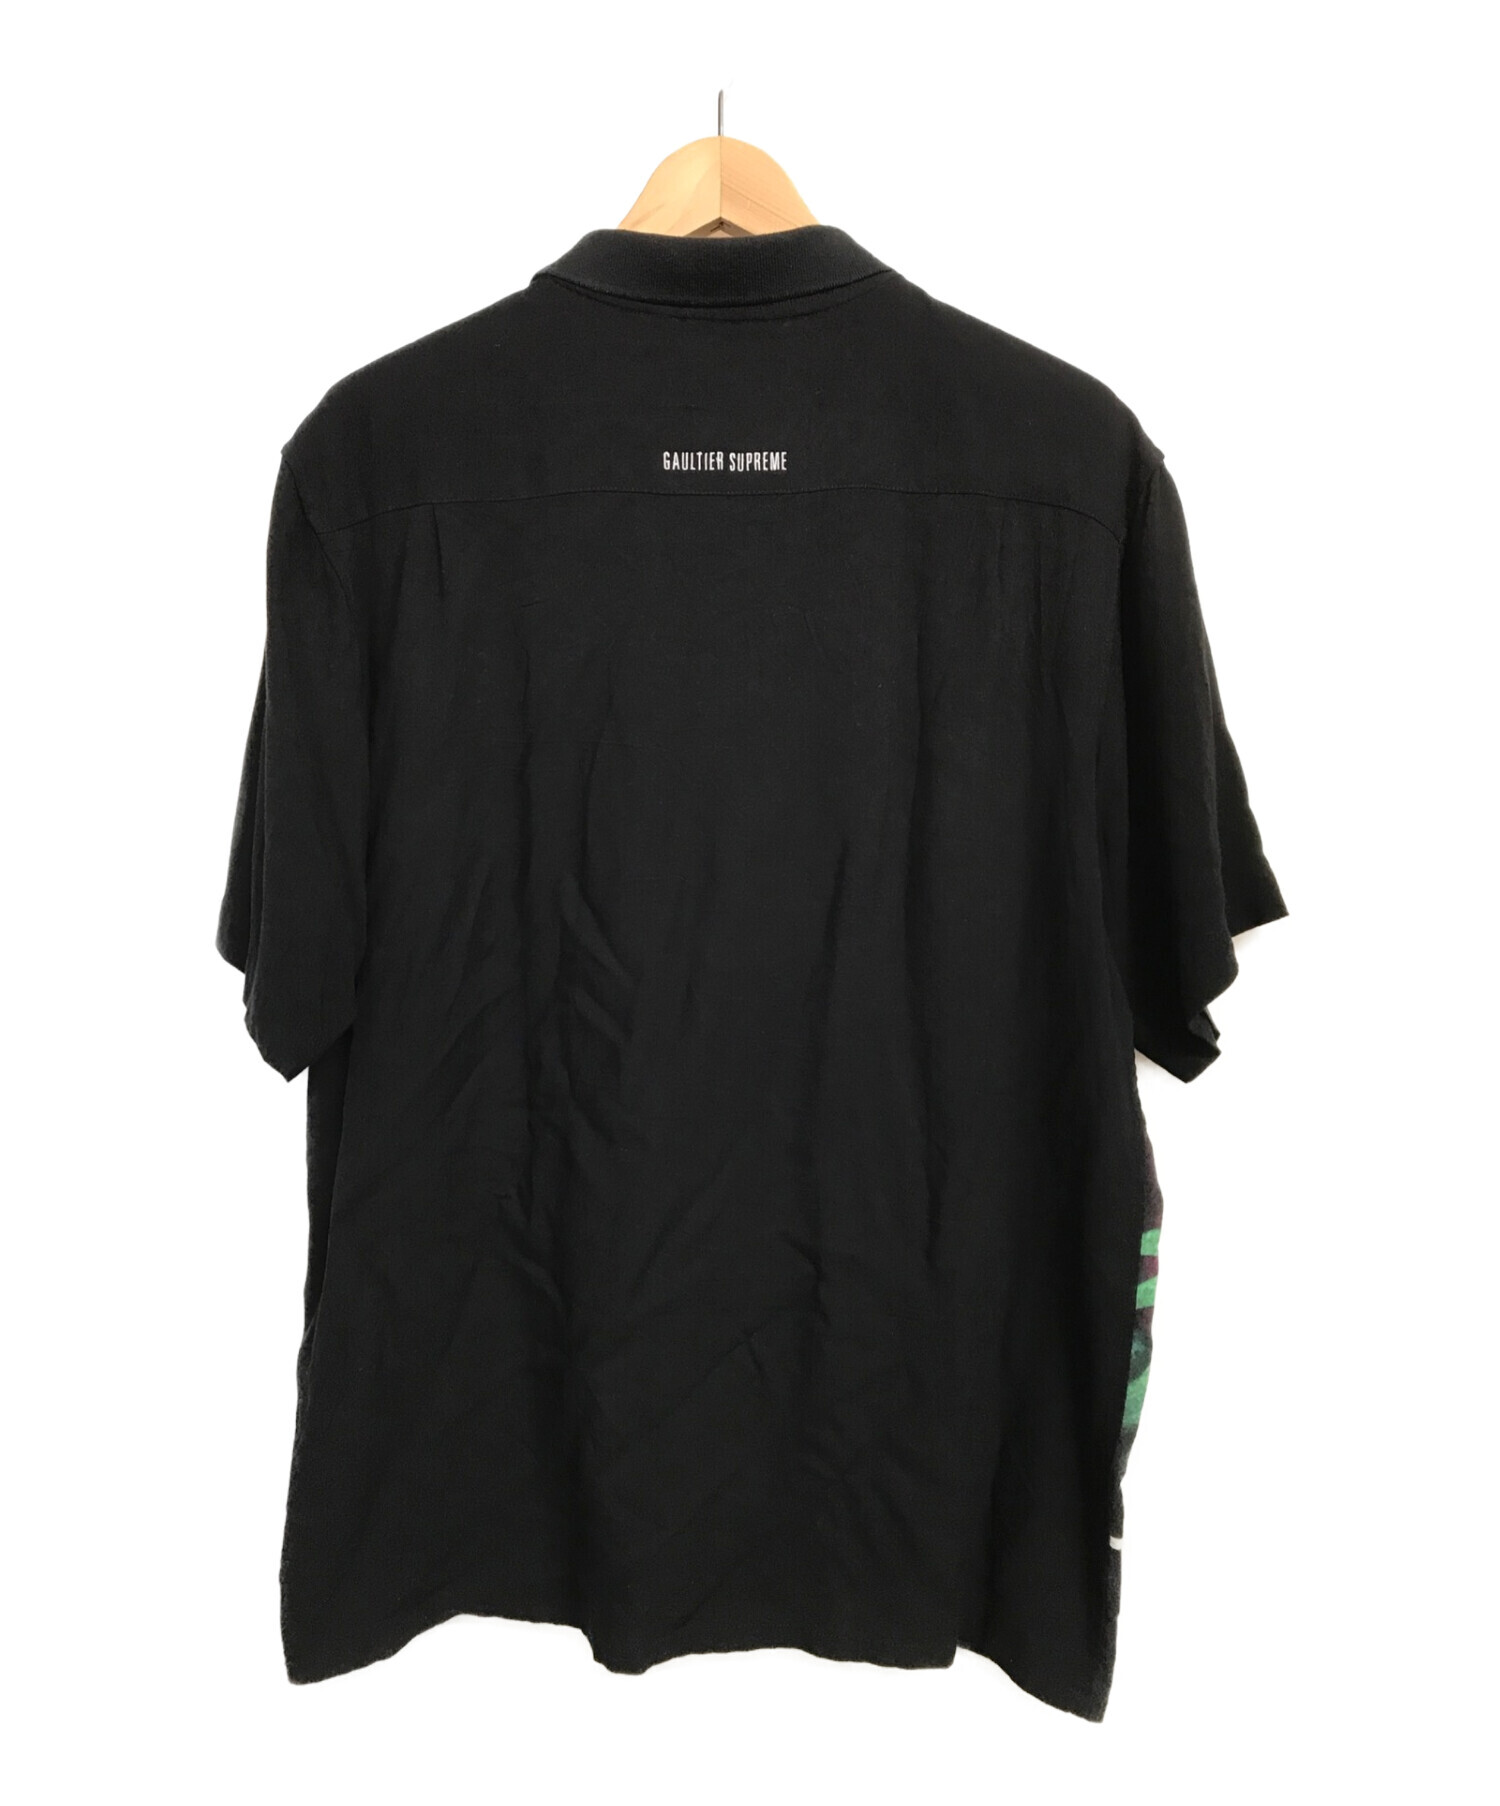 SUPREME × Jean Paul GAULTIER (シュプリーム×ジャンポール・ゴルチエ) Flower Power Rayon Shirt  ブラック×グリーン サイズ:M